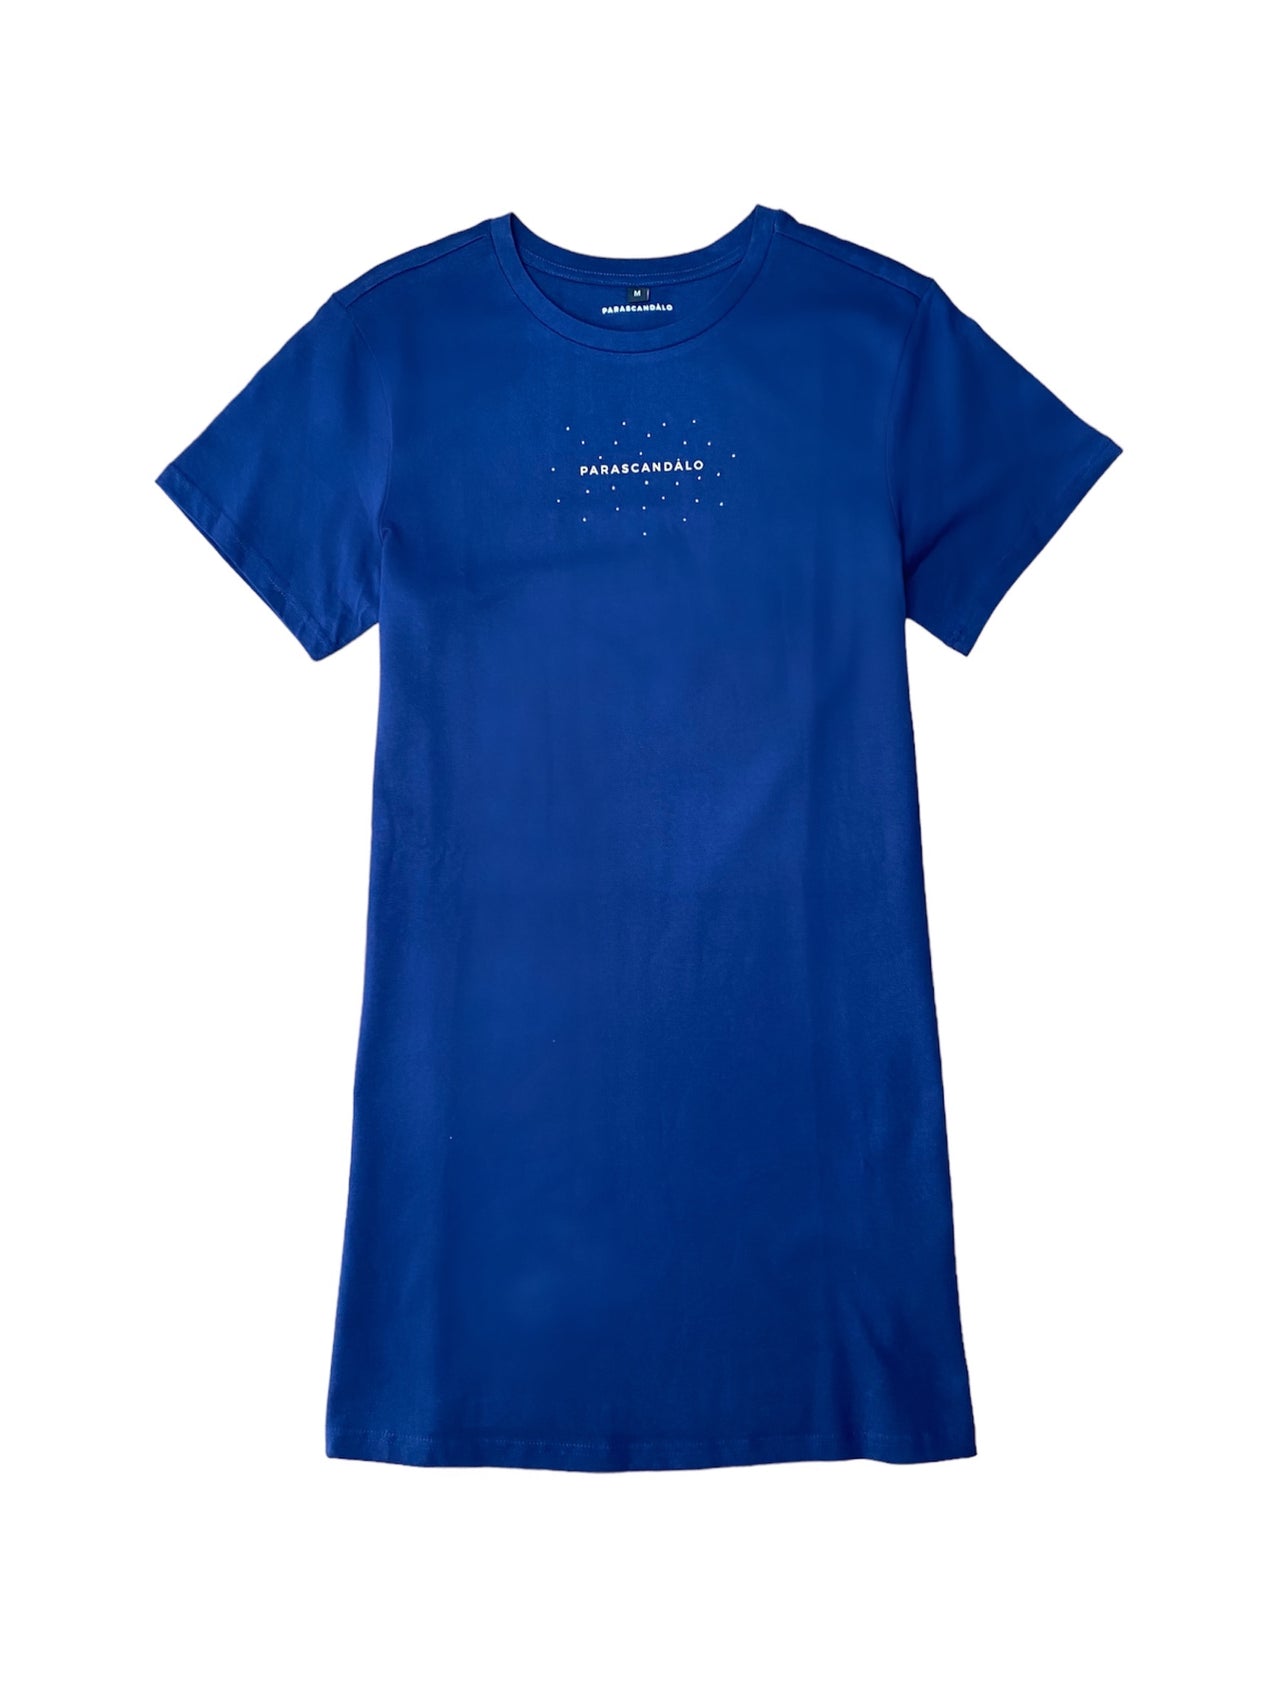 CLASSIC LOGO AND RHINESTONES T-SHIRT DRESS BLUE